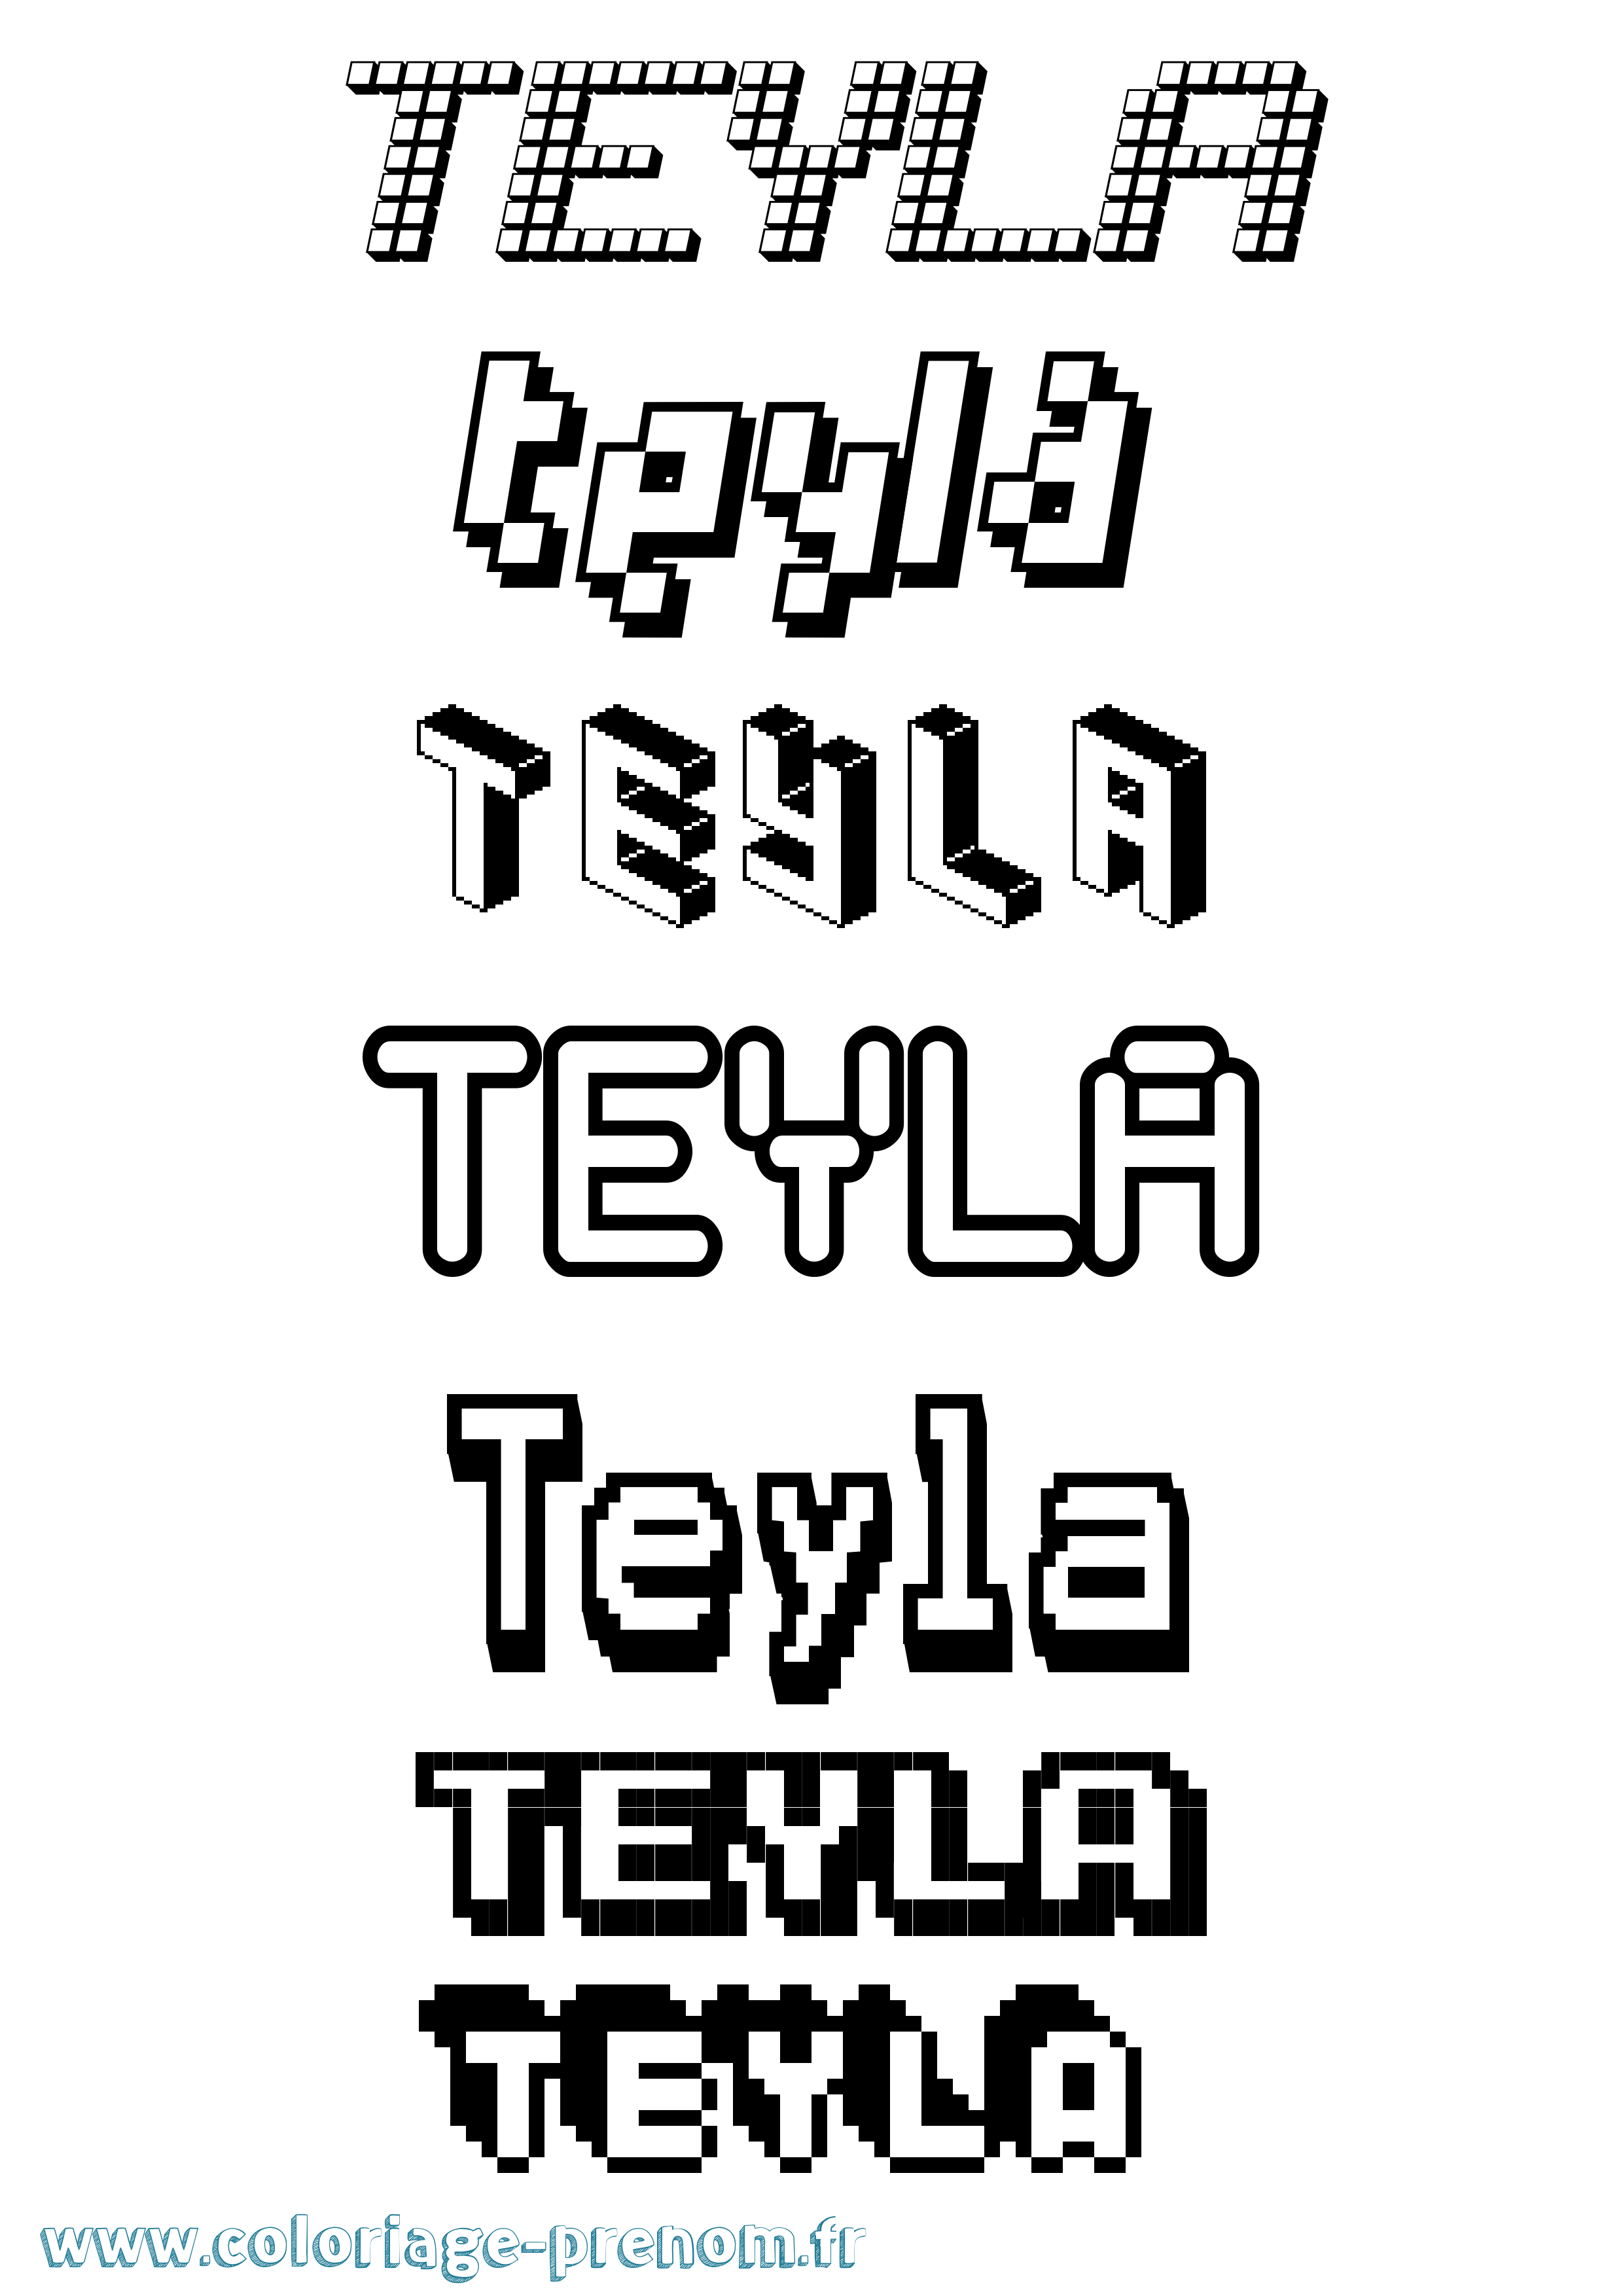 Coloriage prénom Teyla Pixel